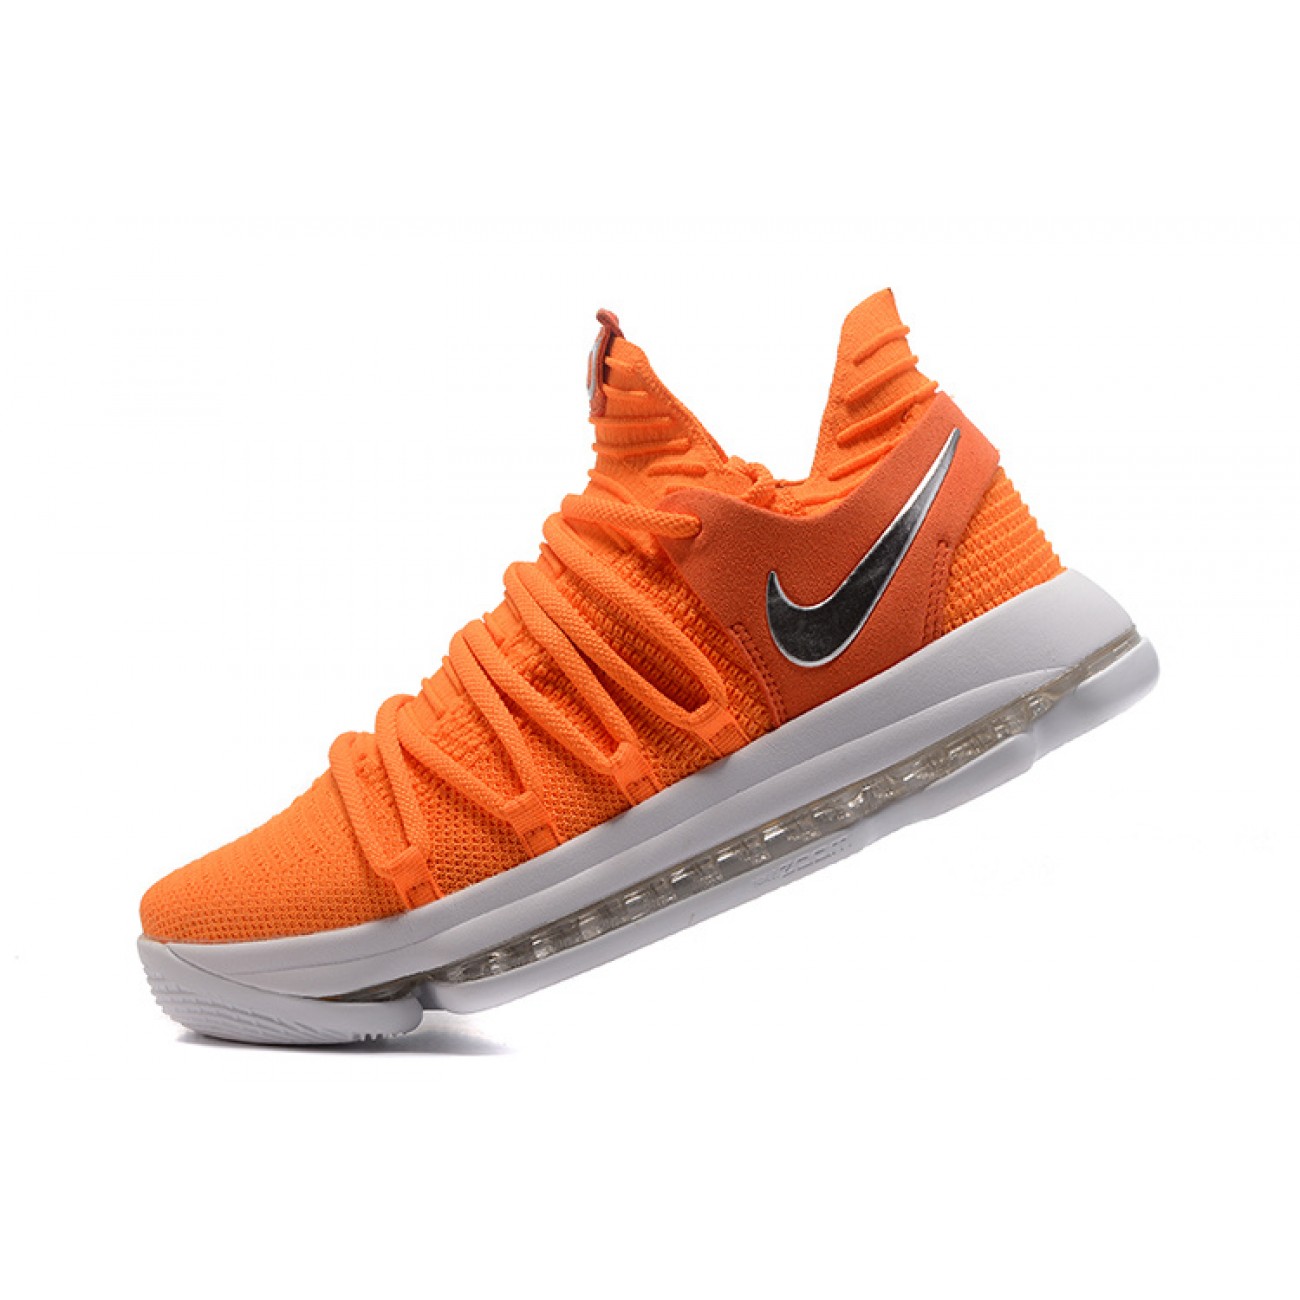 Nike Zoom Kevin Durant KD10 EP Orange/Silver/White